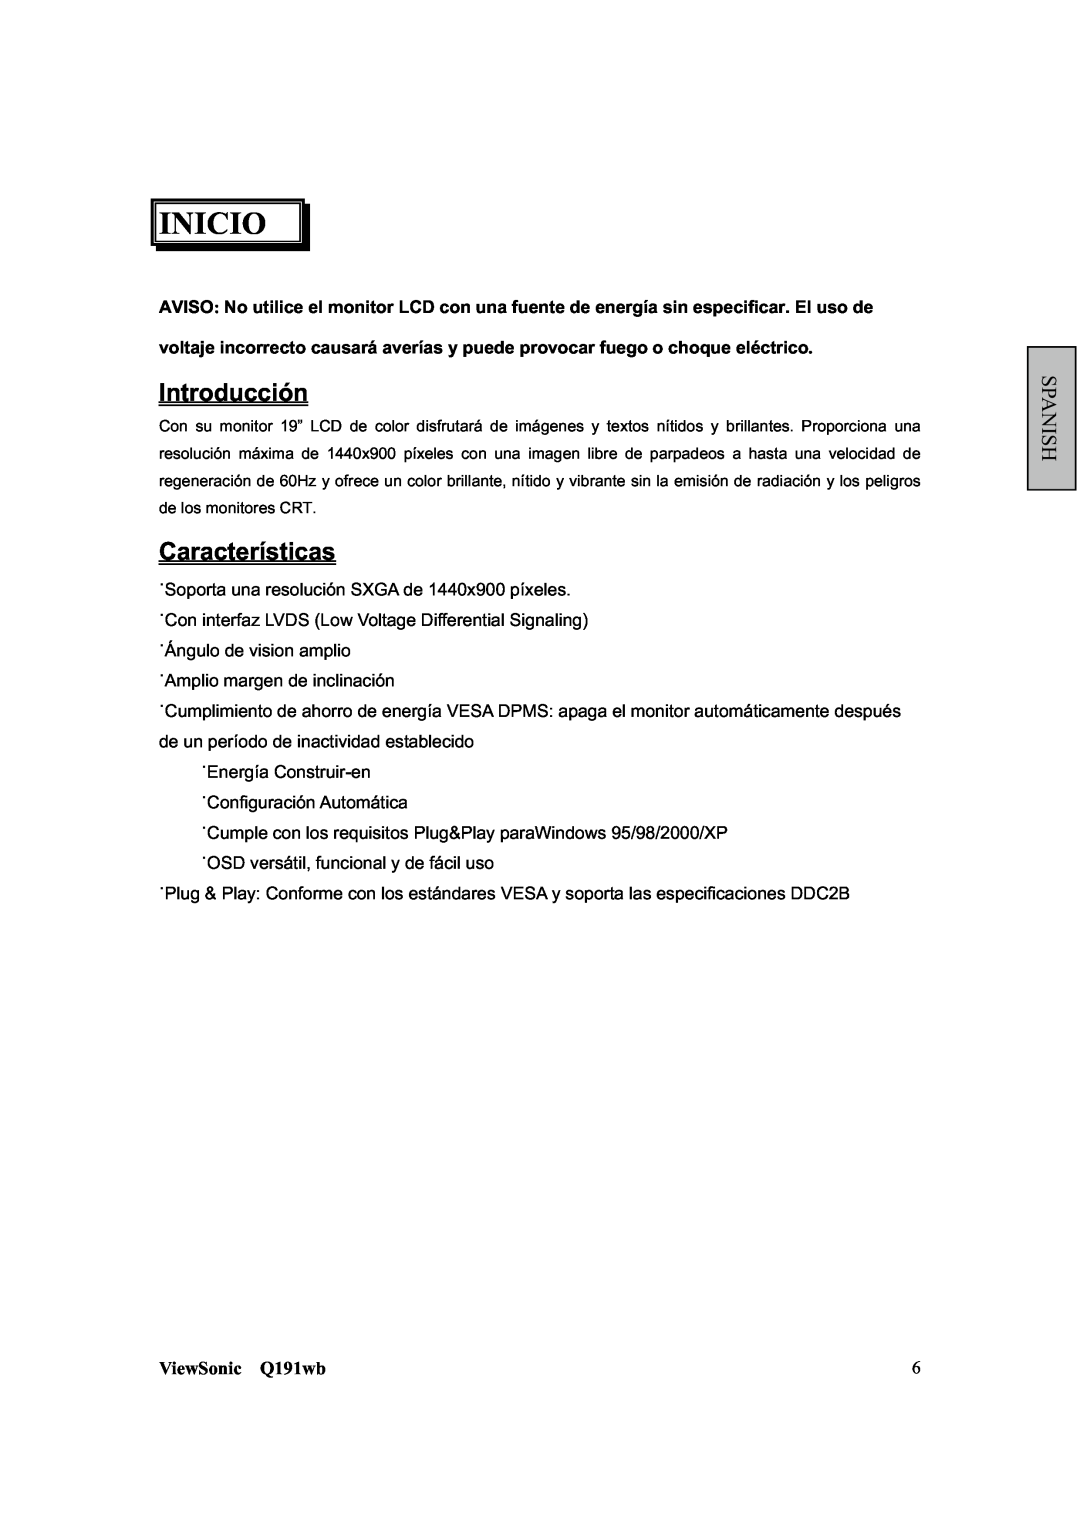 ViewSonic Q191WB manual Introducción, Características, Inicio, ViewSonic Q191wb 